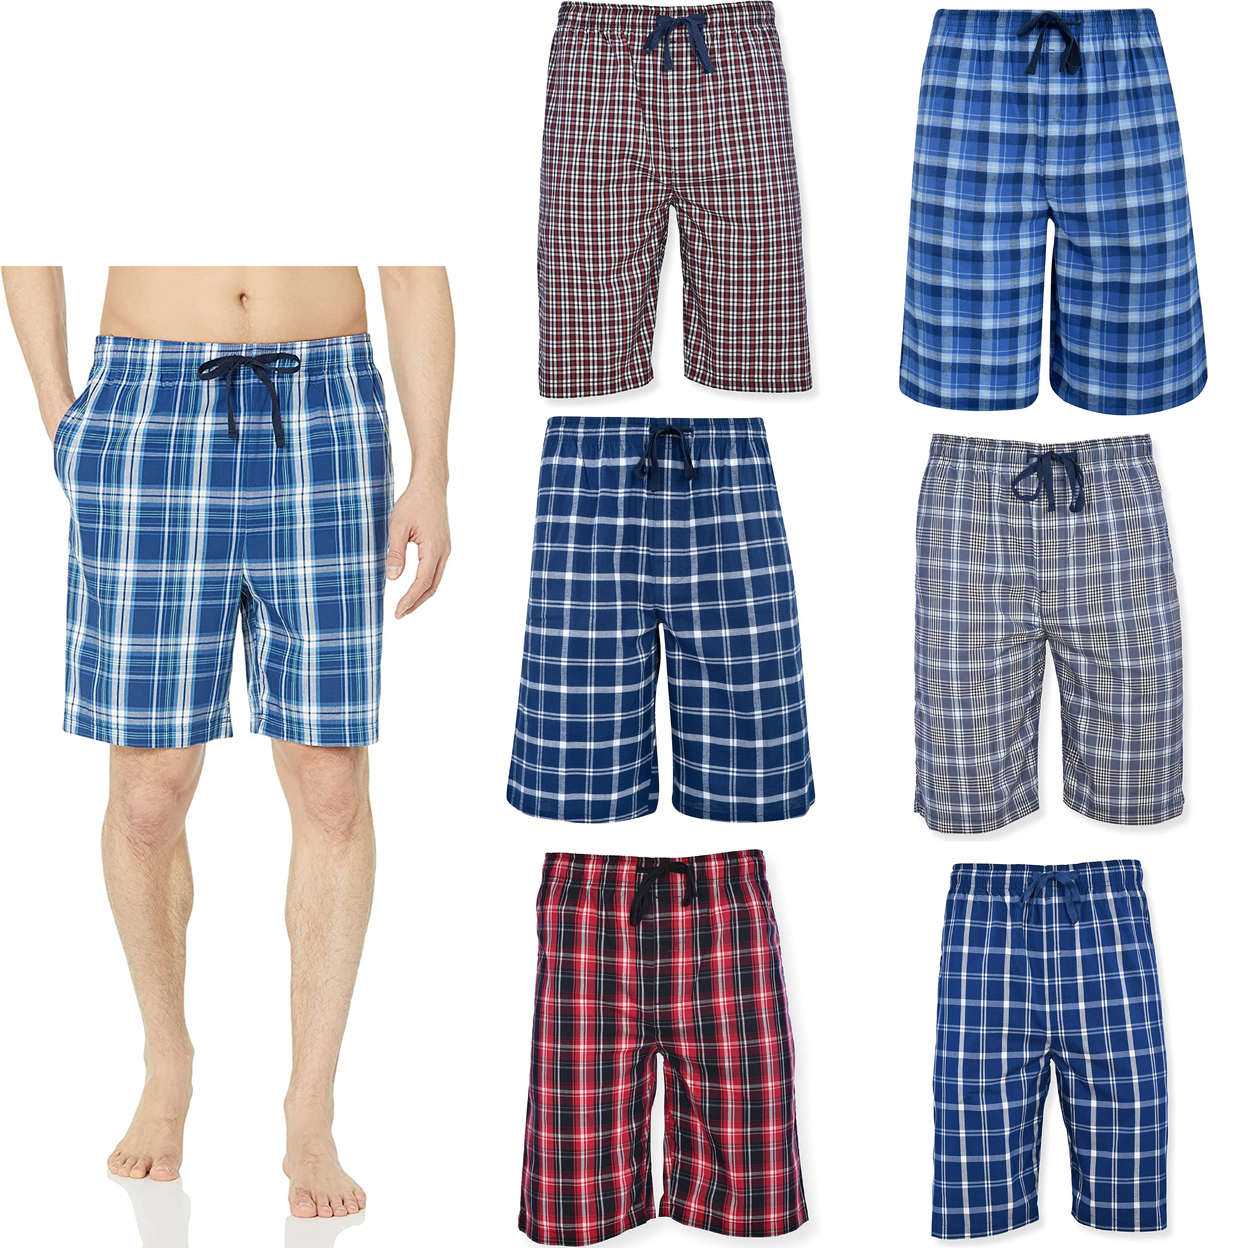 2-Pack: Men's Ultra Soft Plaid Lounge Pajama Sleep Wear Shorts - Black & Blue, Large